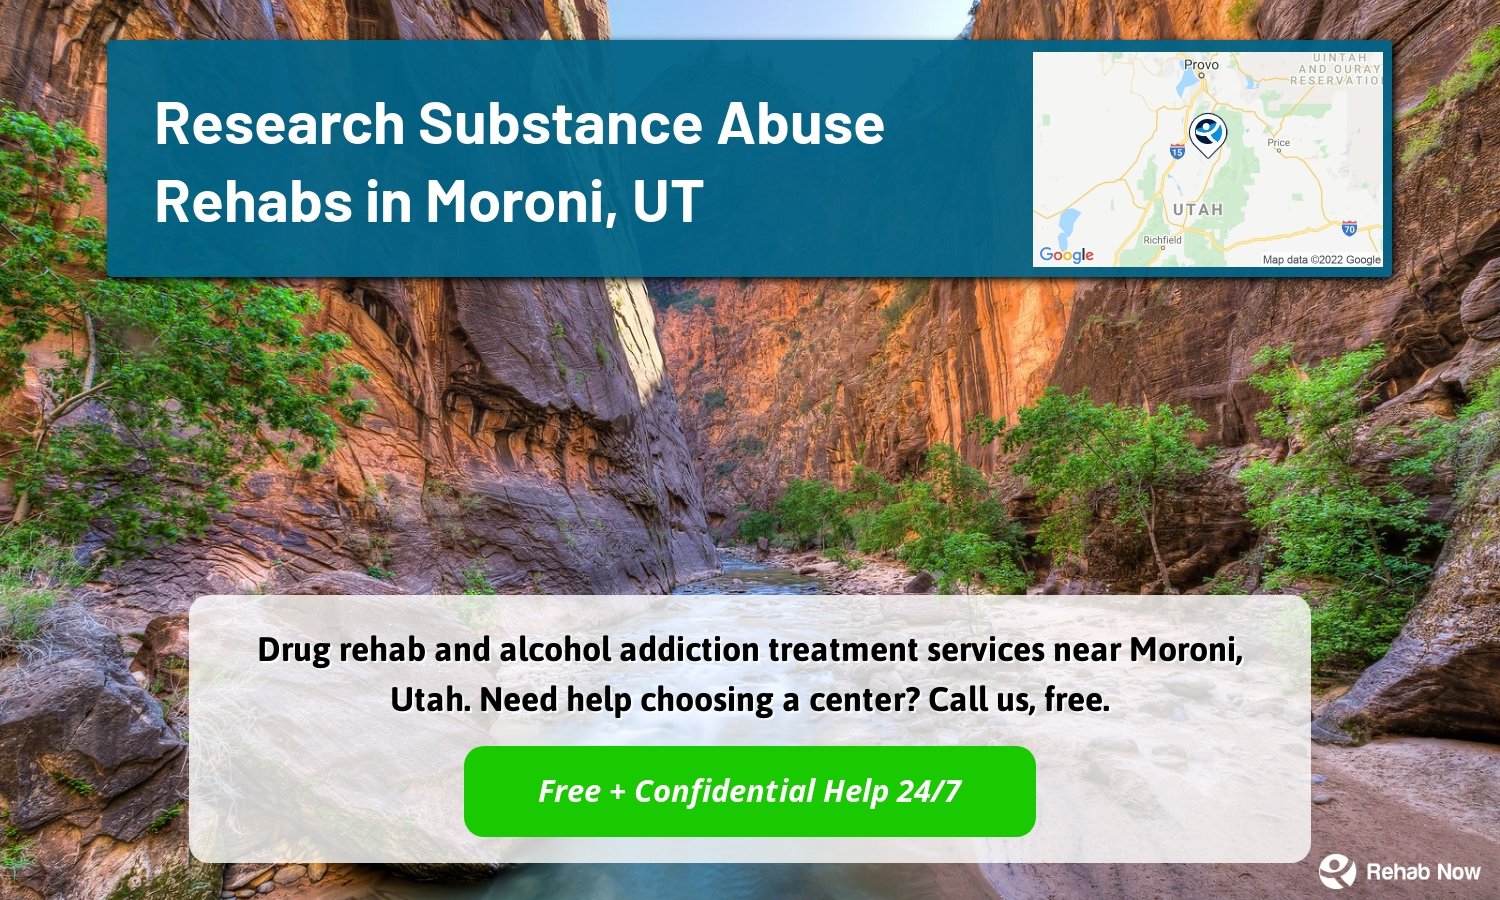 Drug rehab and alcohol addiction treatment services near Moroni, Utah. Need help choosing a center? Call us, free.